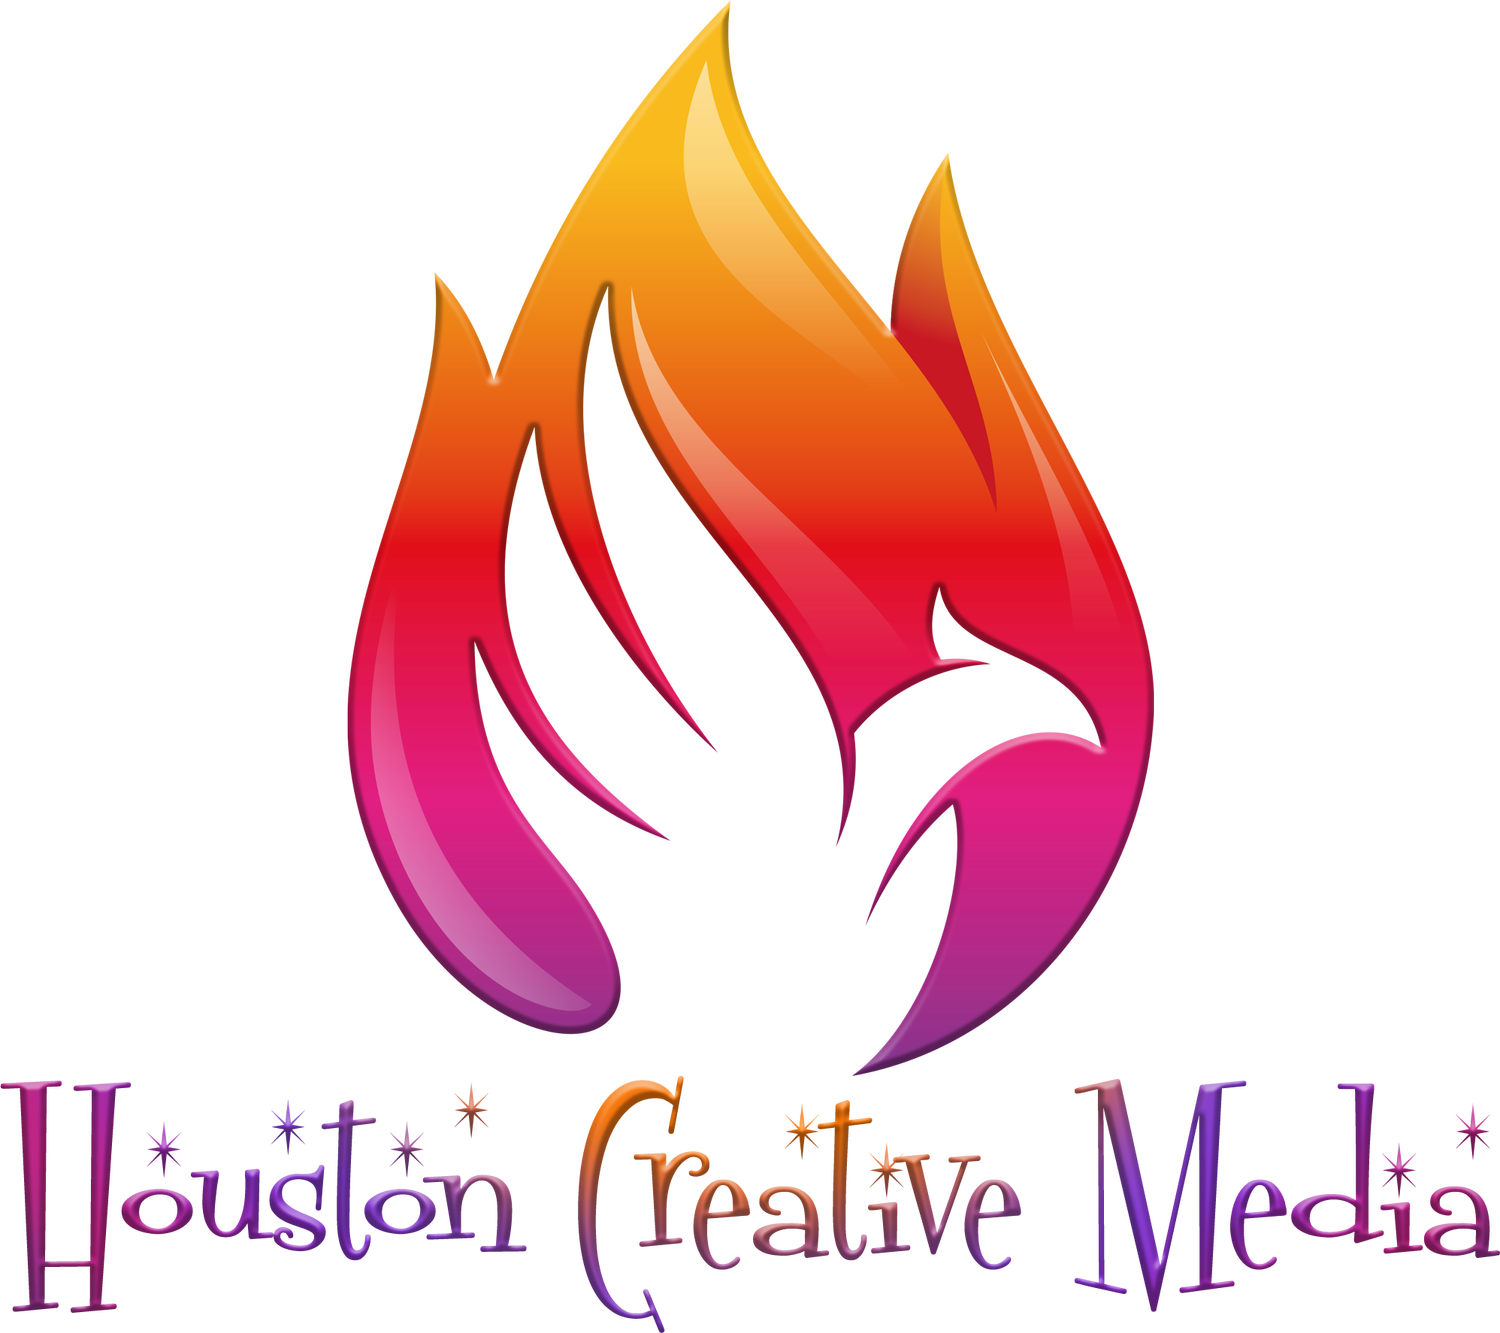 Houston Creative Media